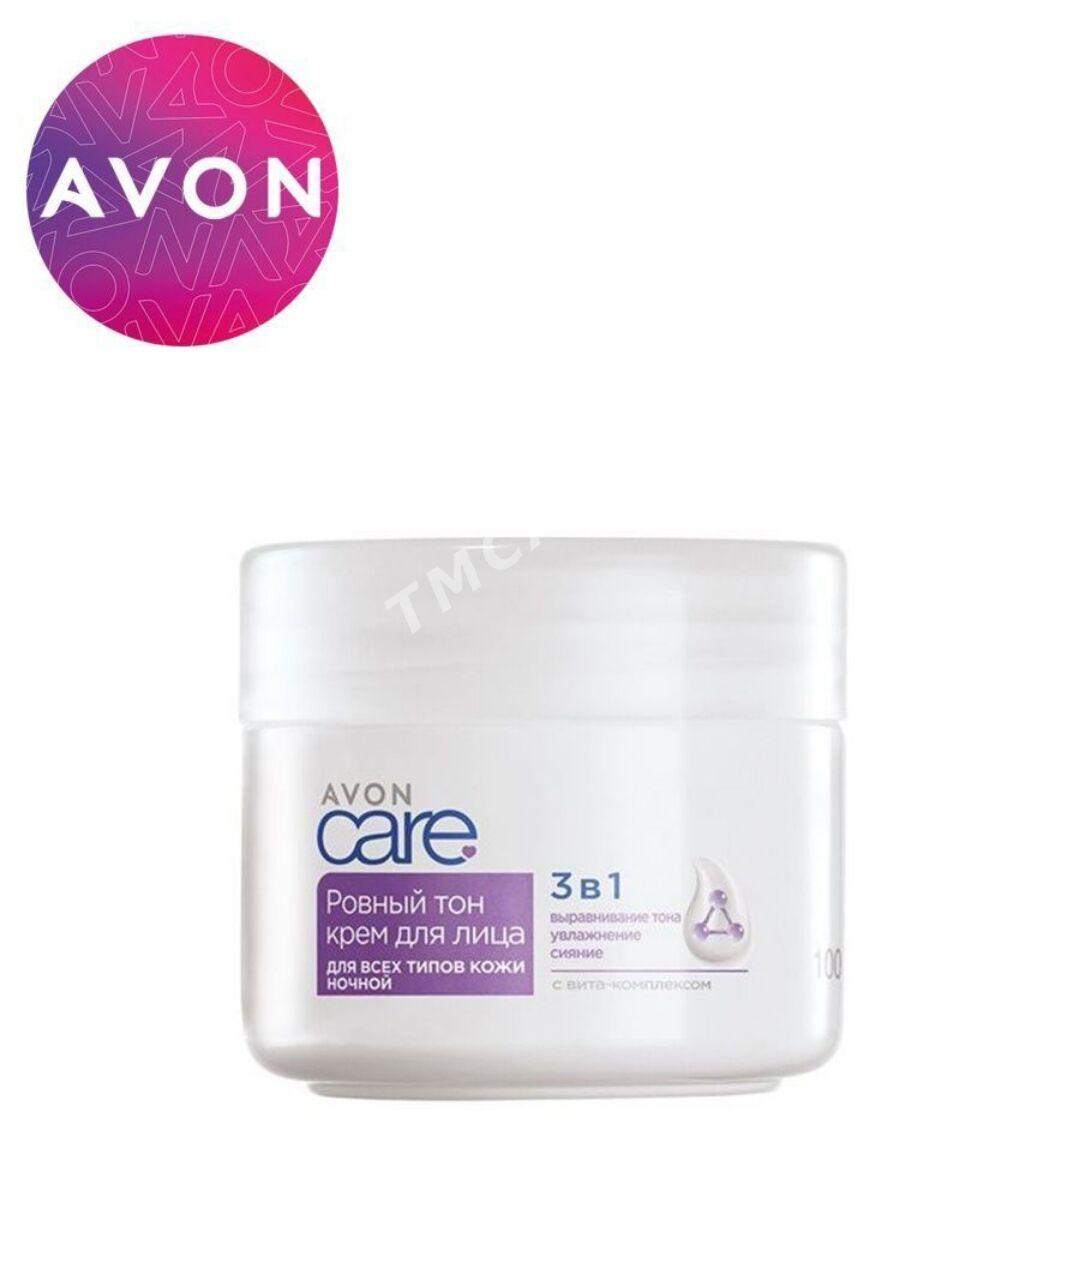 Avon Care - 10 mkr - img 2